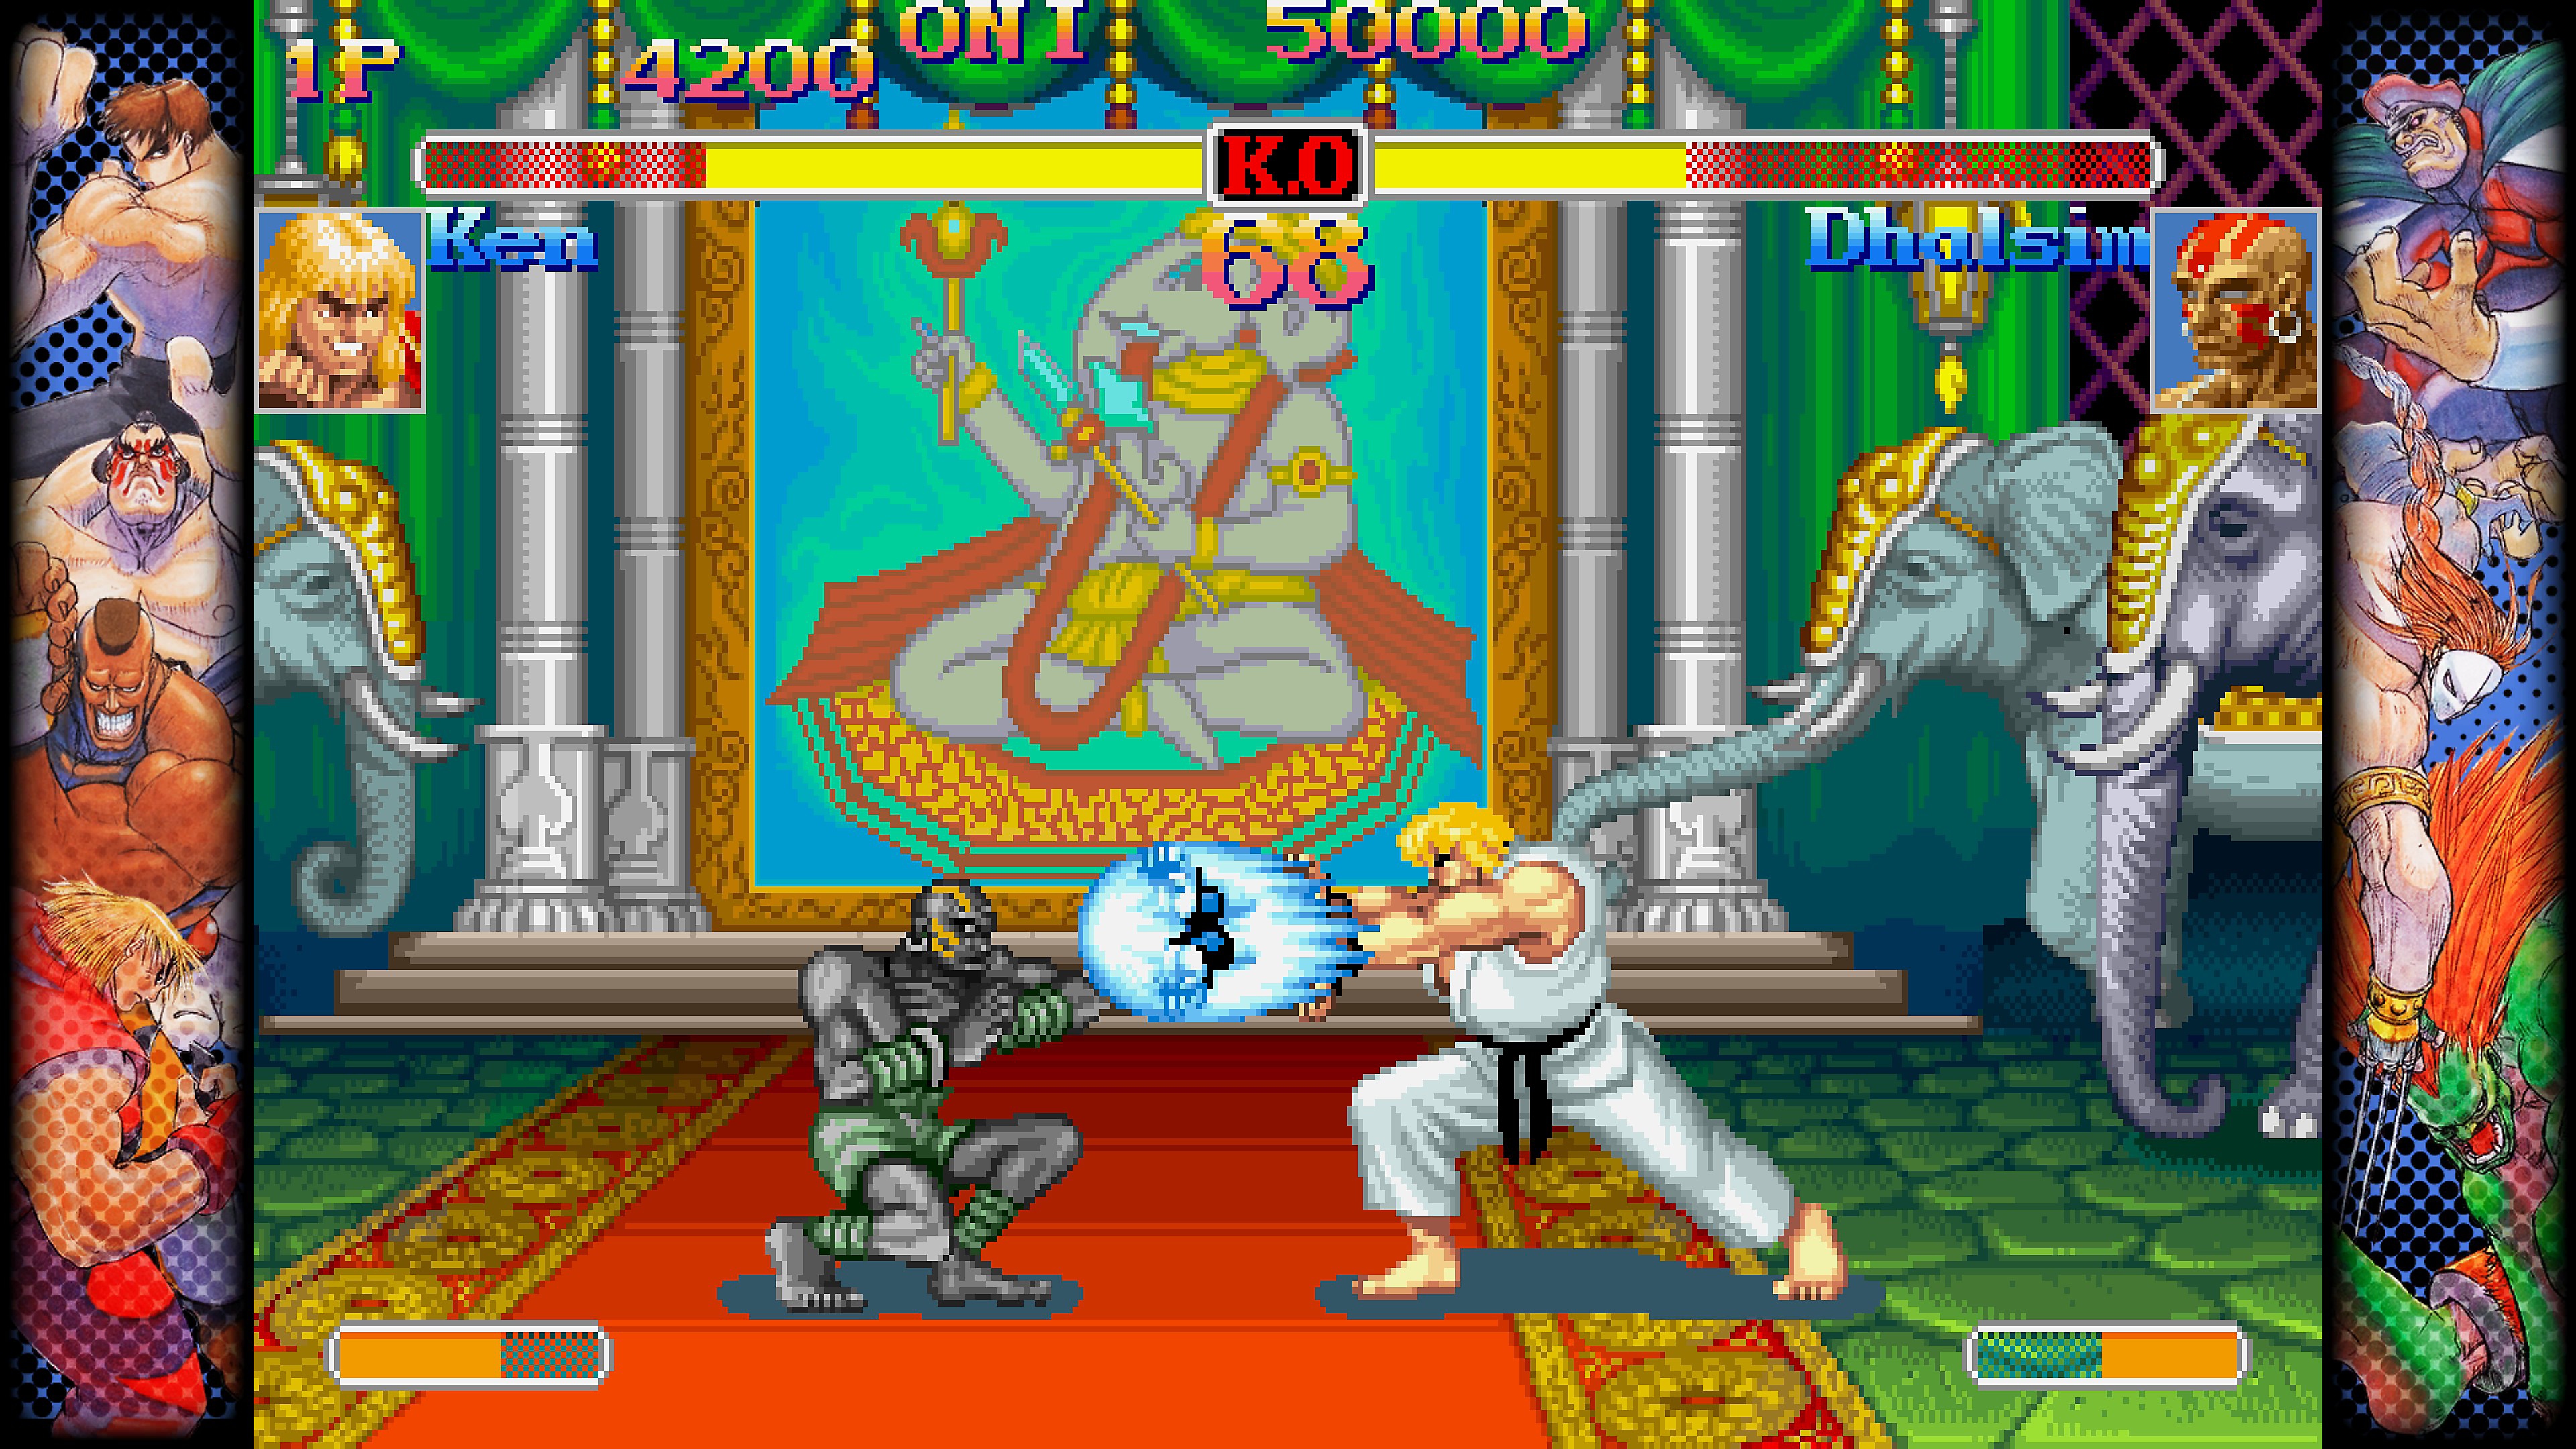 Captura de pantalla de Capcom Fighting Collection que muestra una pelea entre dos personajes